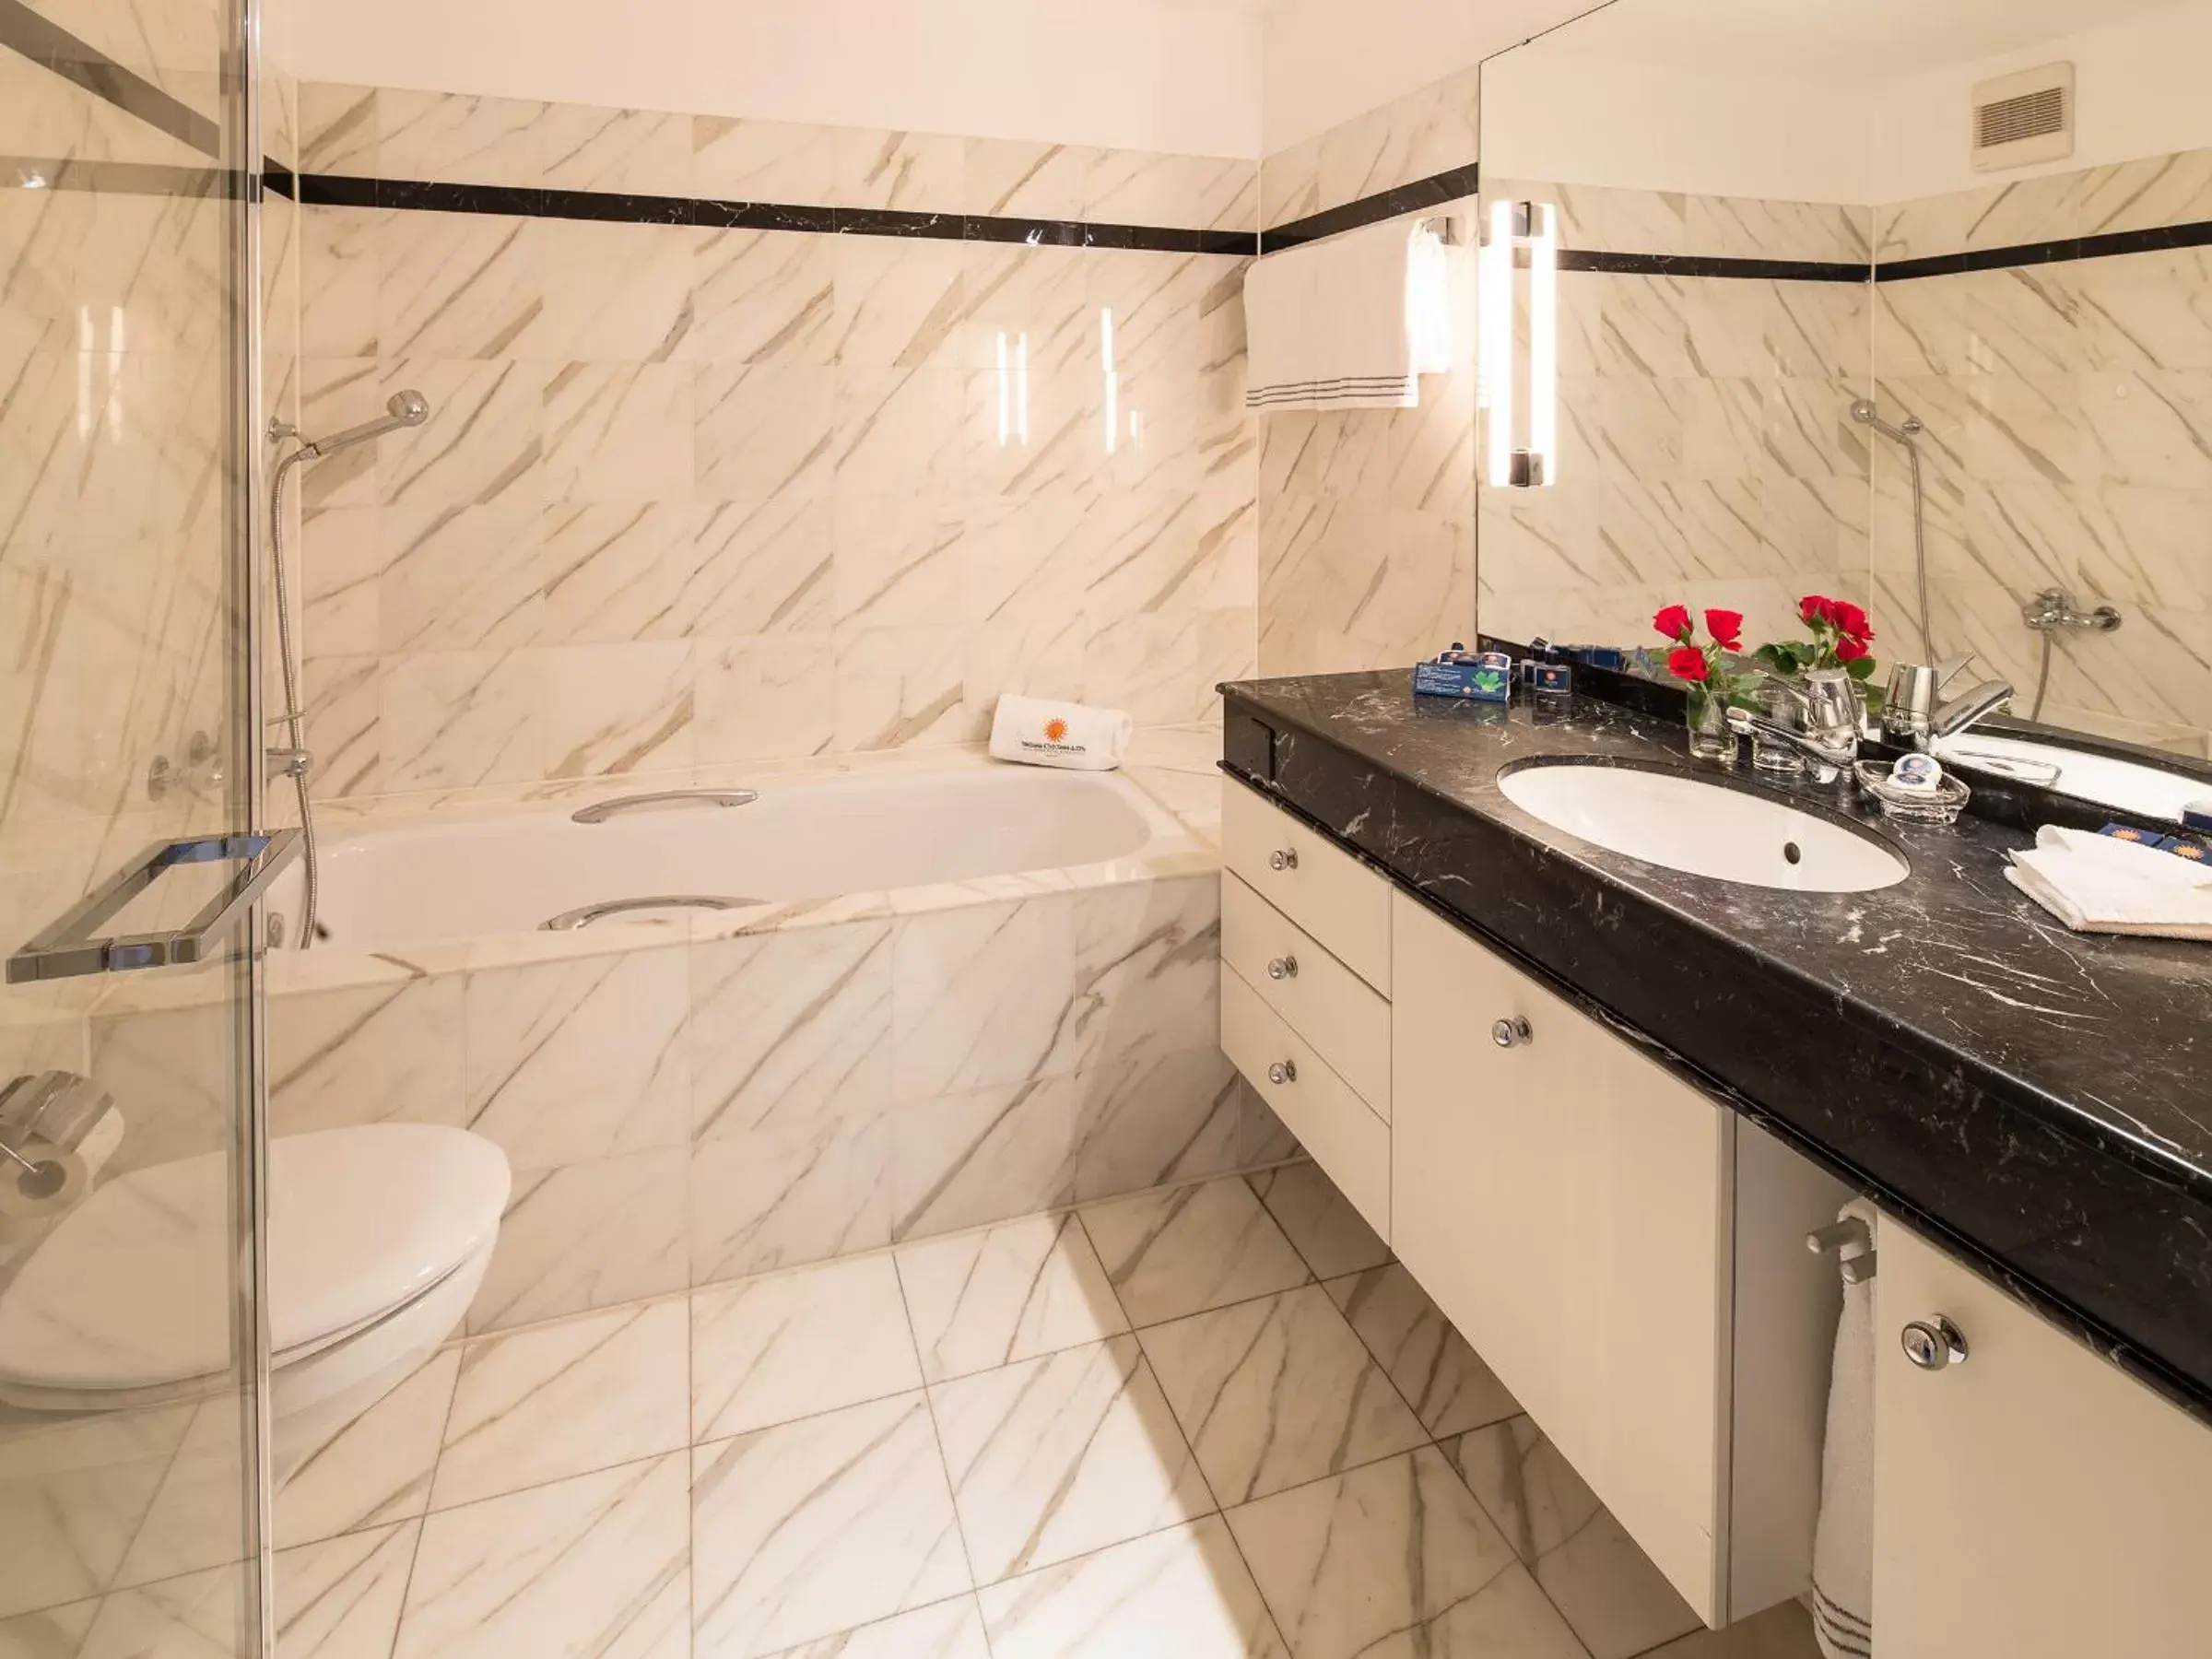 Bathroom in Villa Sassa Hotel, Residence & Spa - Ticino Hotels Group